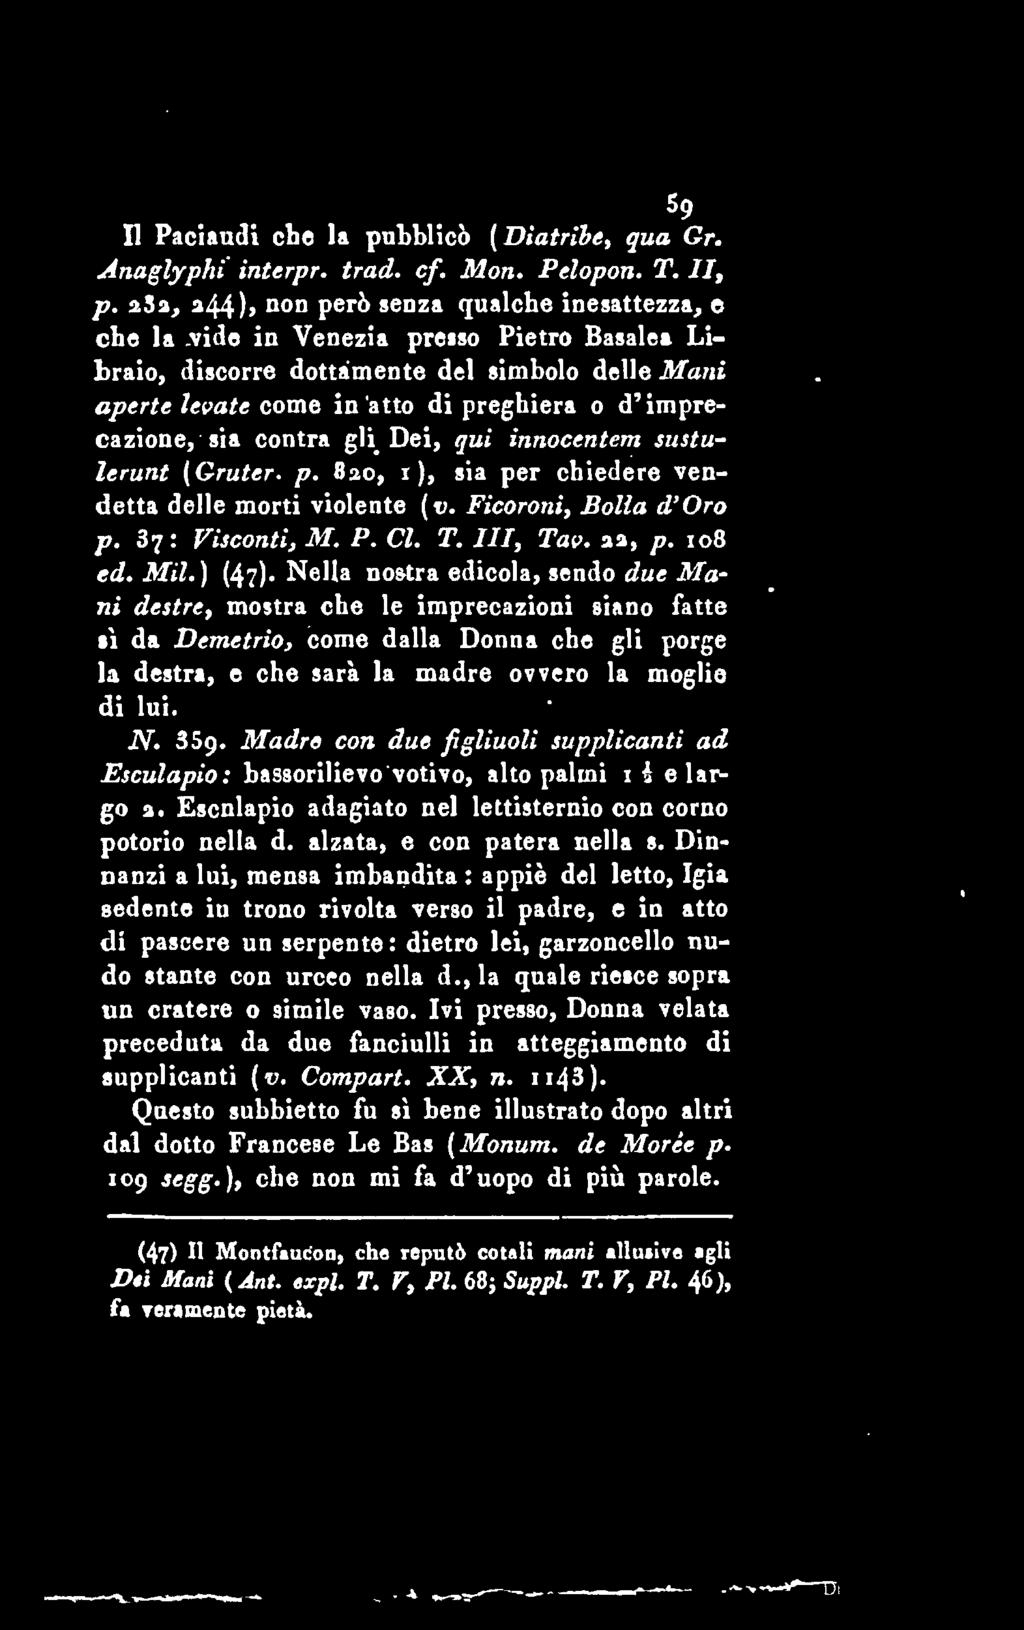 H Paciandl cbe la pnbblicb {Diatribe, qua Gr. Anaglyphi interpr. trad. cf. Mon. Pelopon. T. II, p. 23 a, 344 )> 86Dza quaicbe inesattezza, e cbe la.